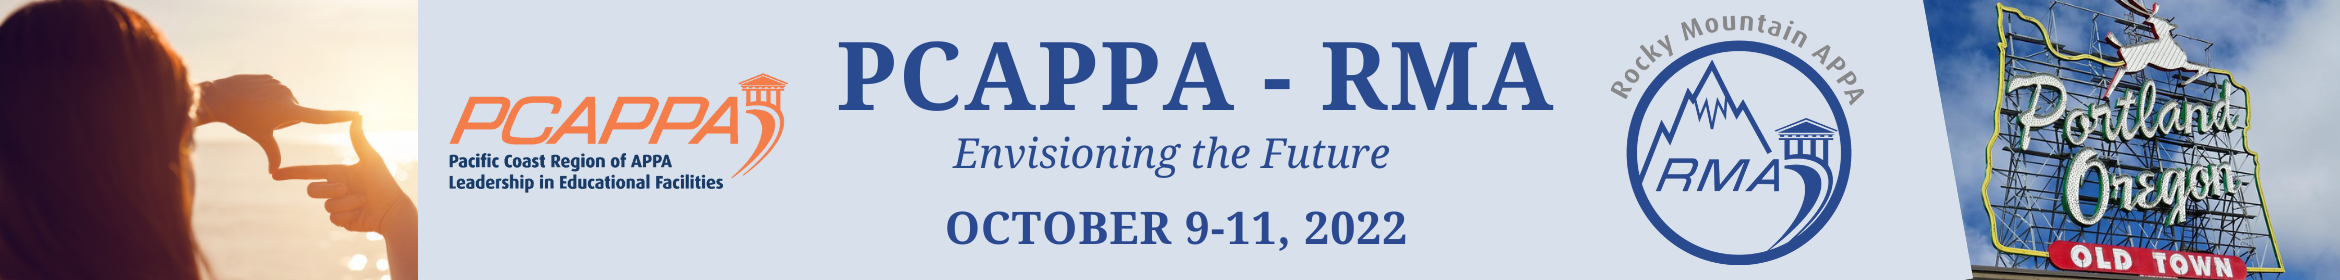 PCAPPA - RMA Main banner